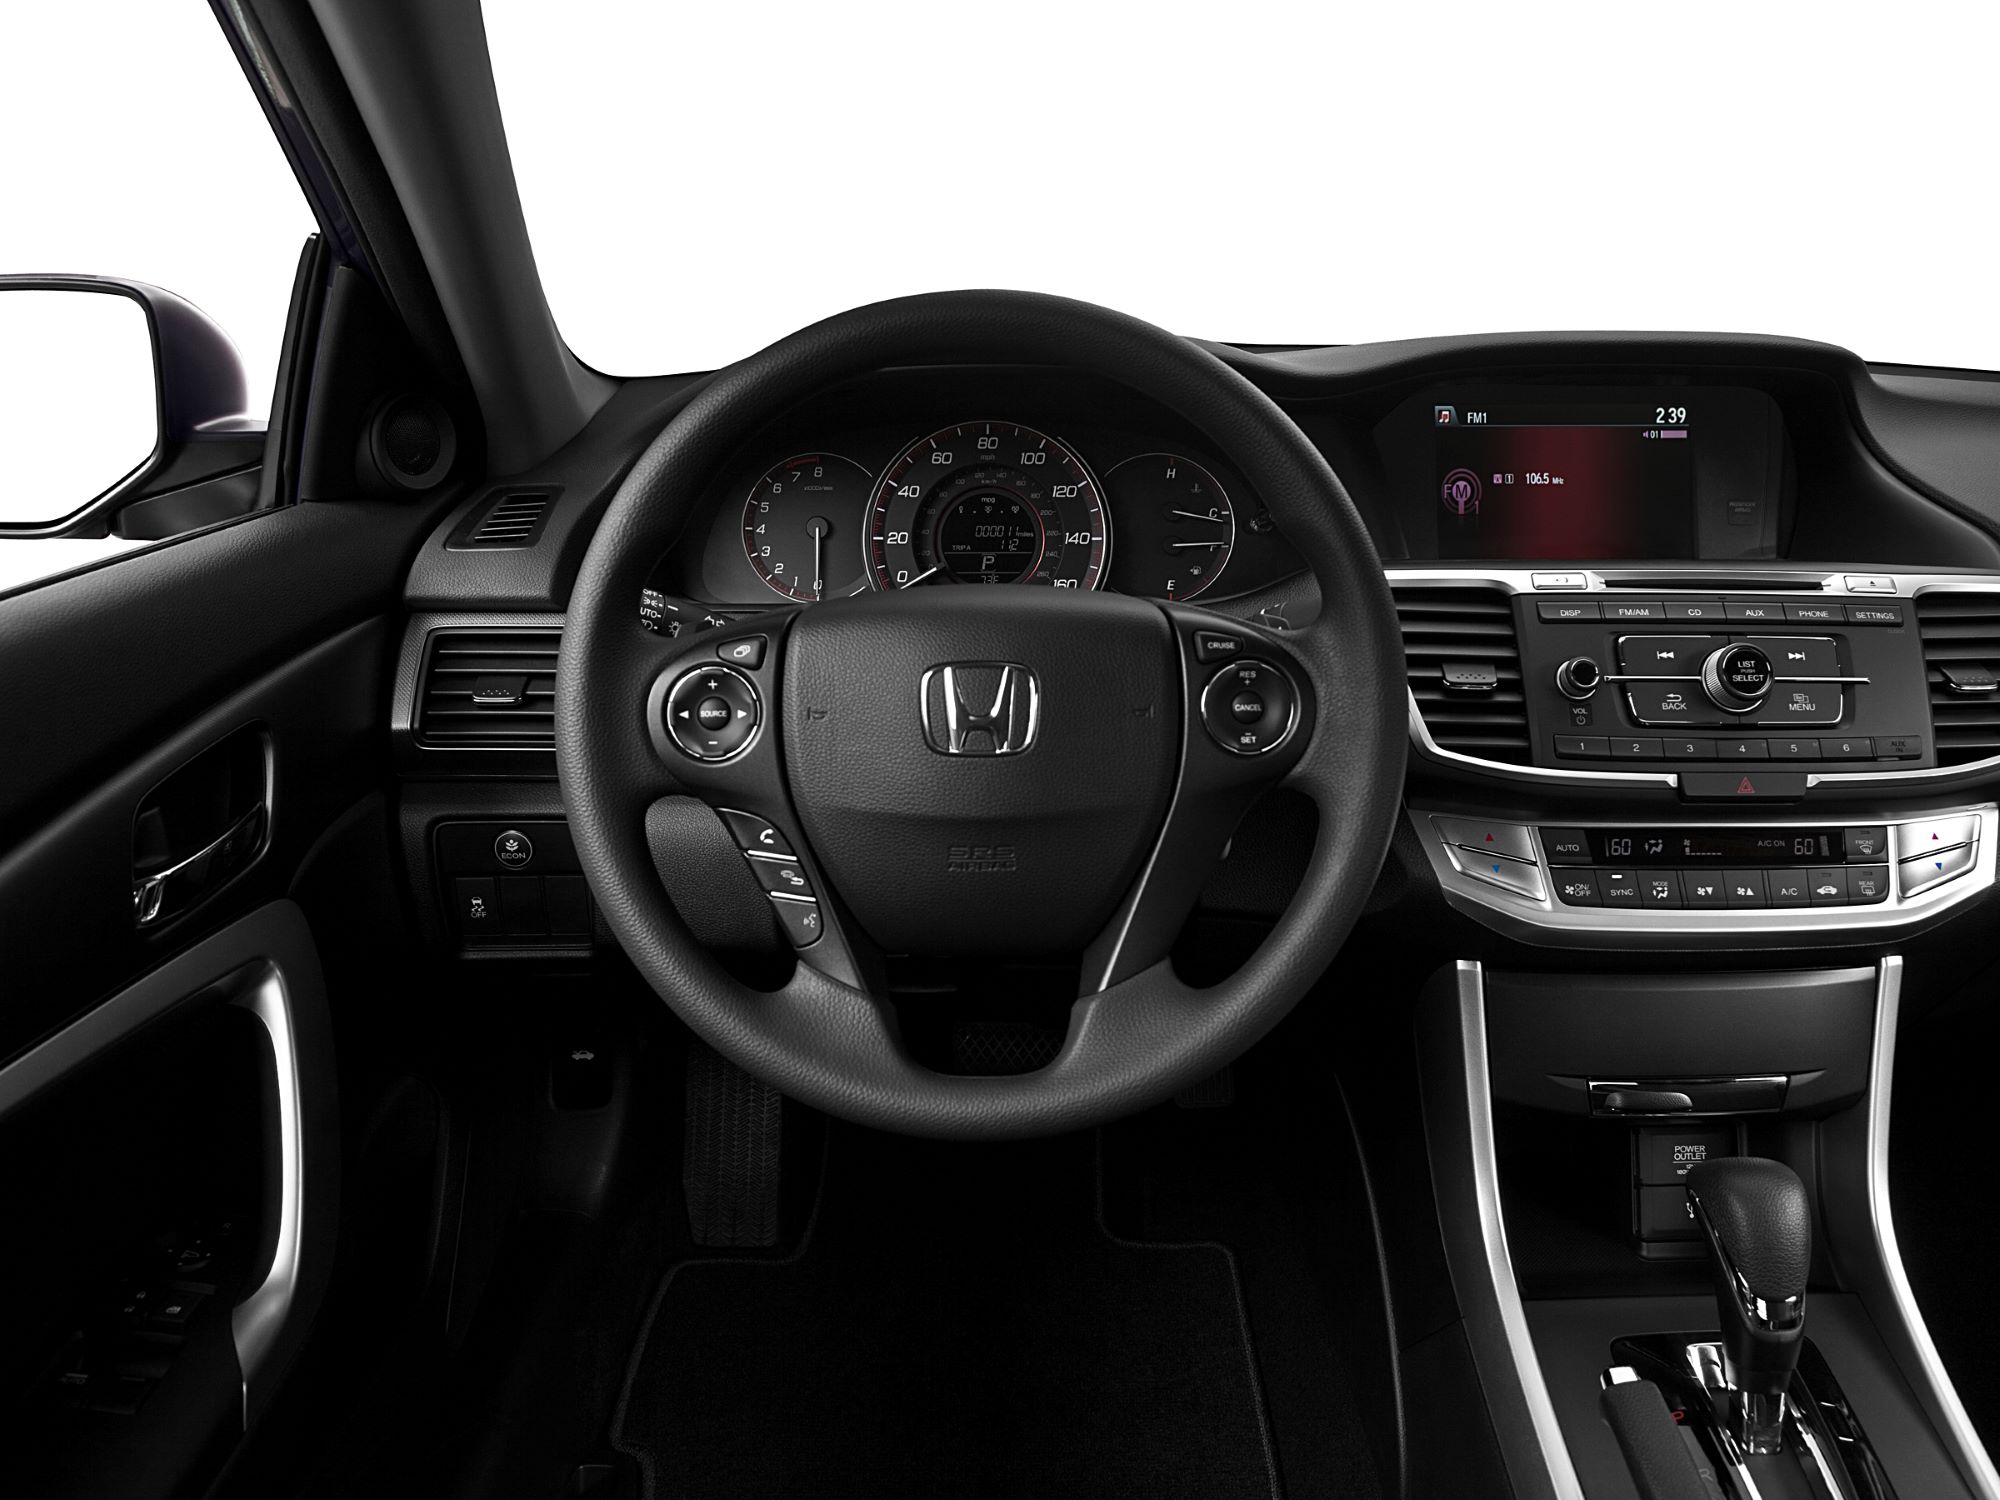 Radio Unit, Contact Local Honda Dealer, Radio Preset Buttons, Older Honda Models, Navigation System